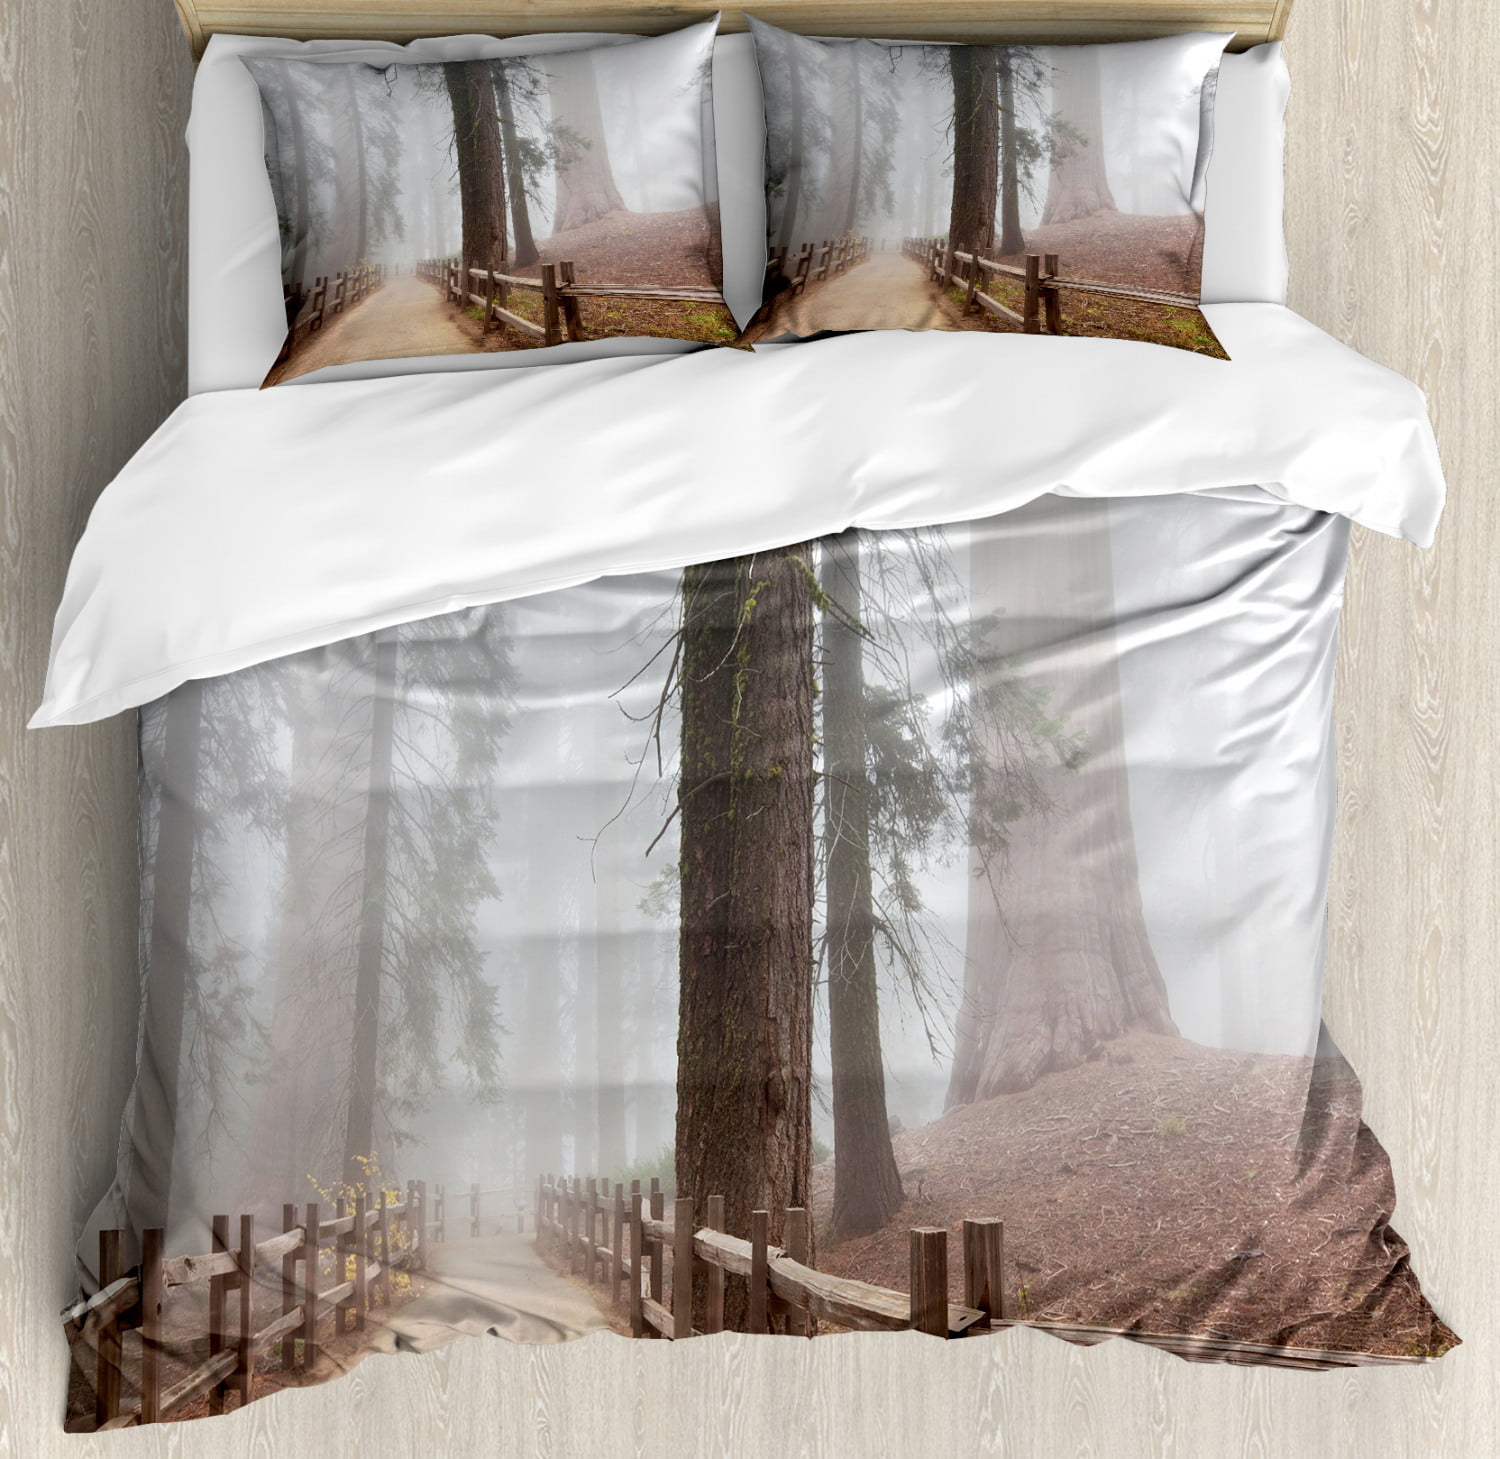 1 Duvet Cover 2 Pillow Shams Queen/King Evergreen 100% Cotton 3pc Bedding Set 